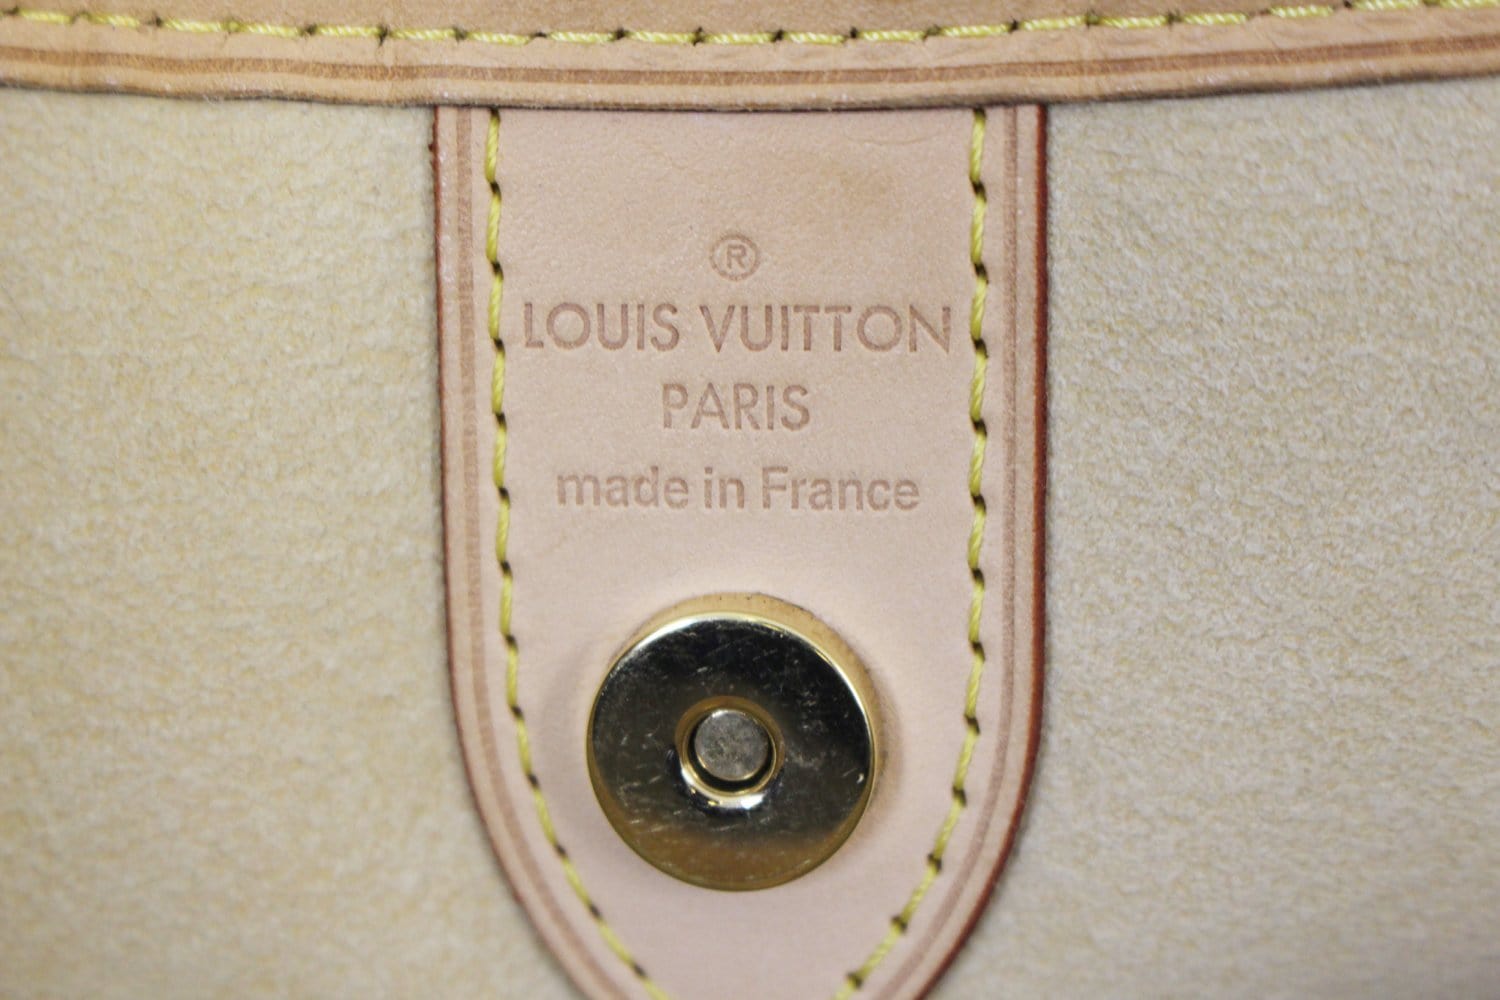 LOUIS VUITTON Galleria PM Damier Azur Handbag - More Than You Can Imagine